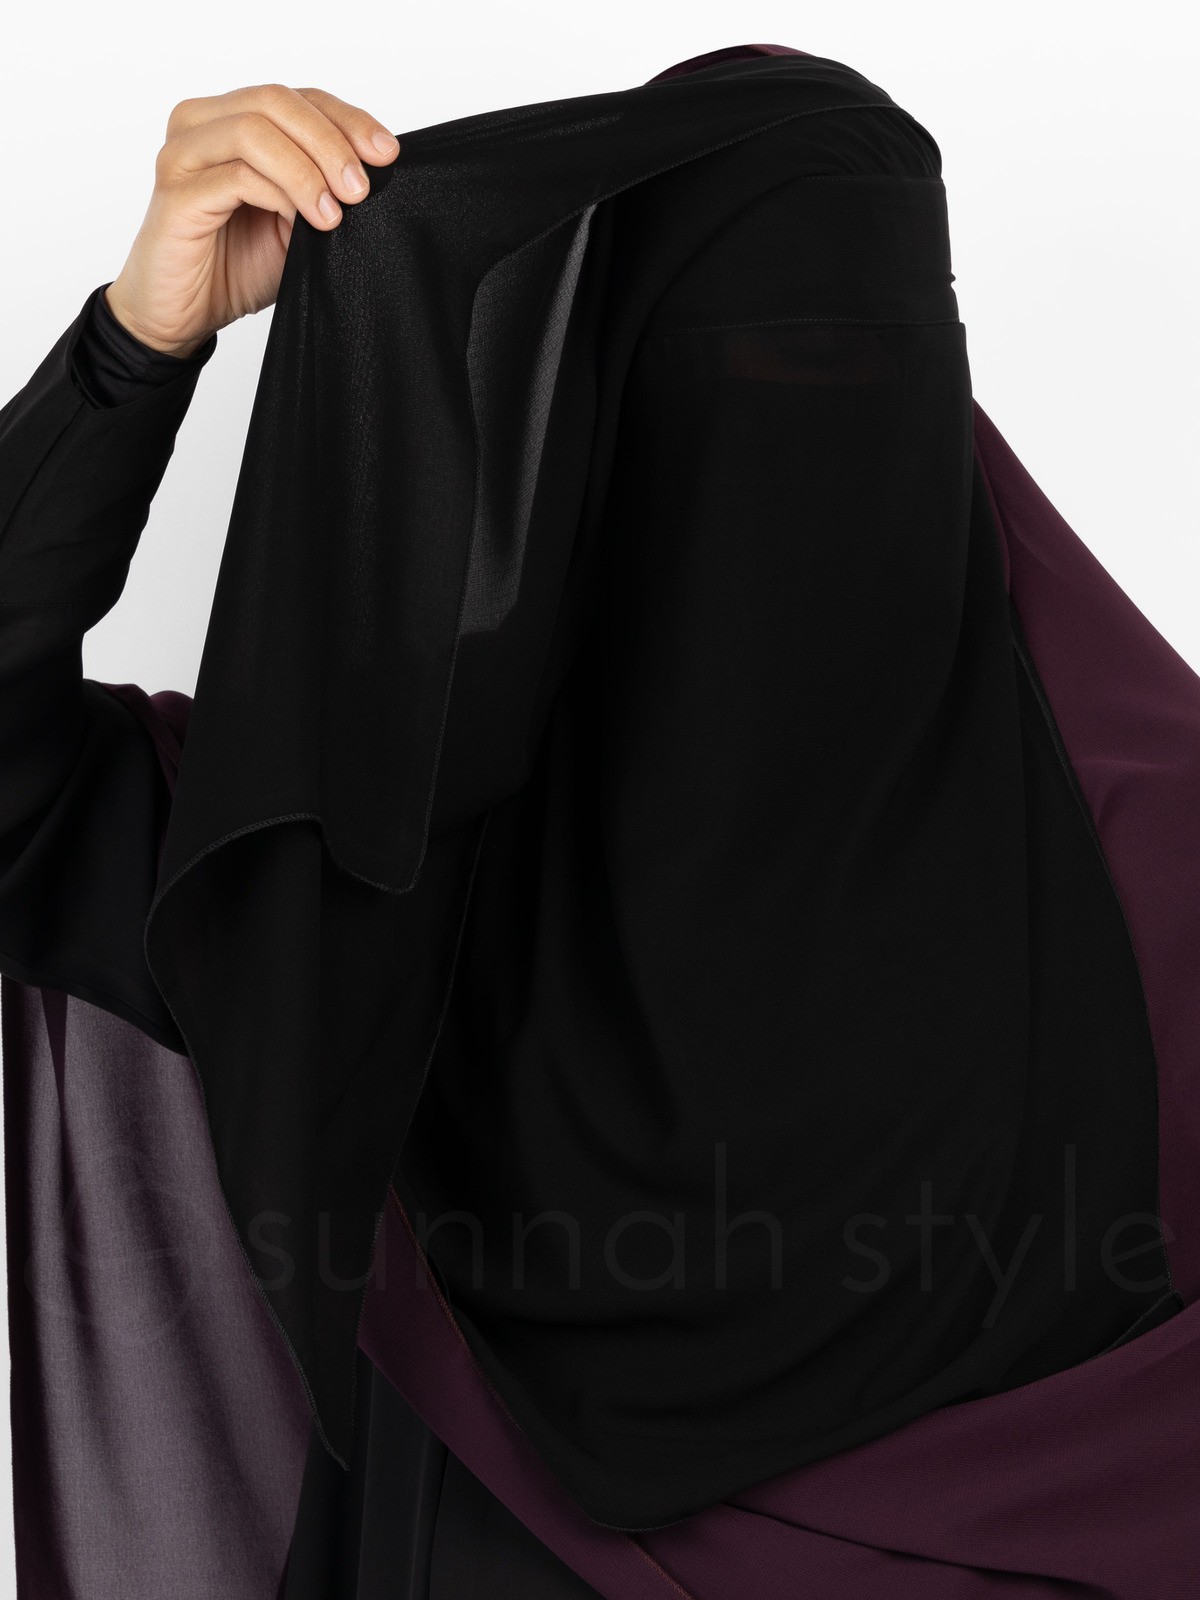 Sunnah Style - No-Pinch Three Layer Niqab (Black)